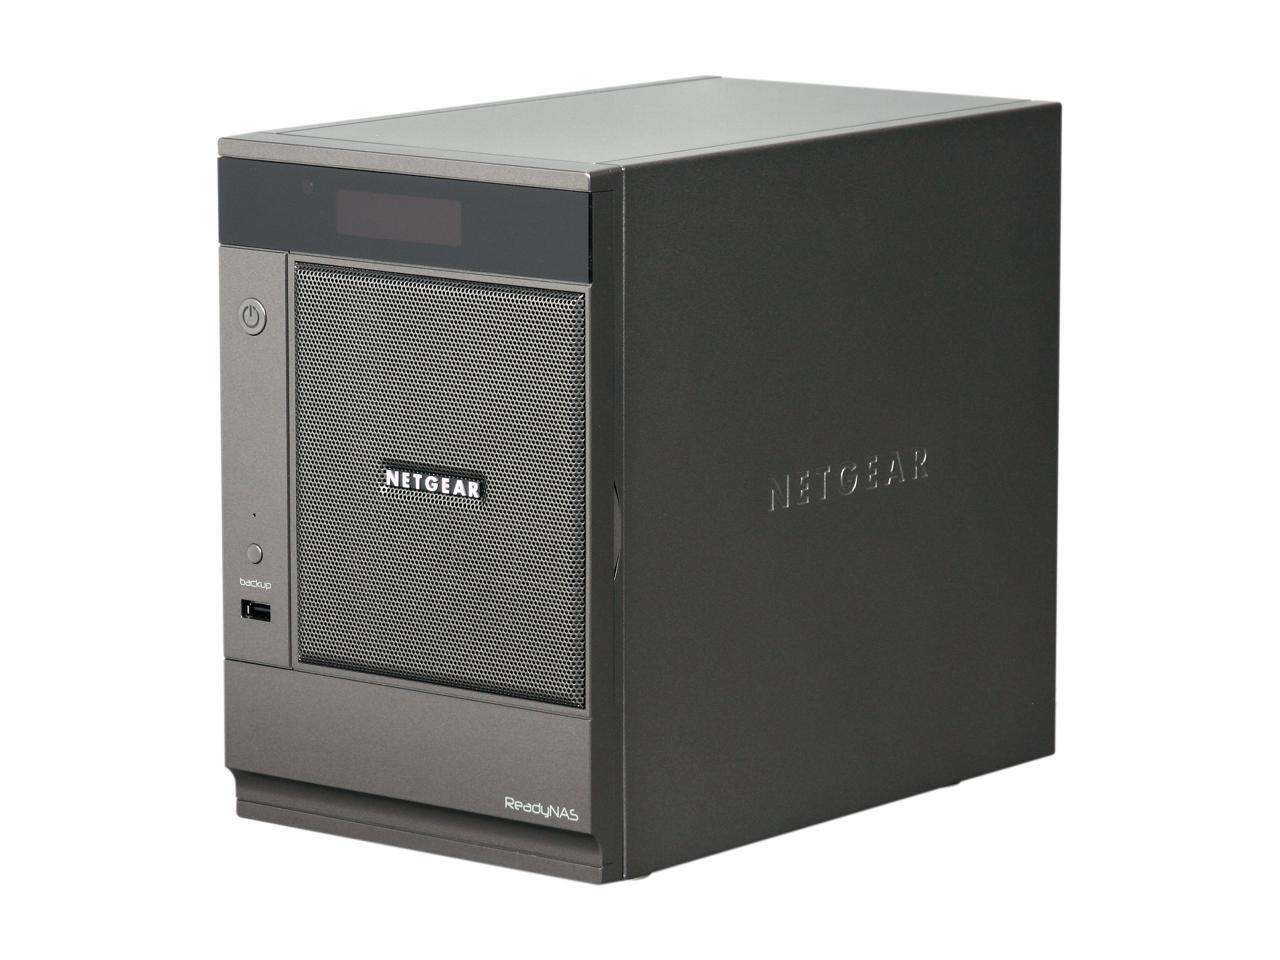 Netgear RNDU6000-100NAS Diskless ReadyNAS Ultra 6 Drive Storage System |Untested